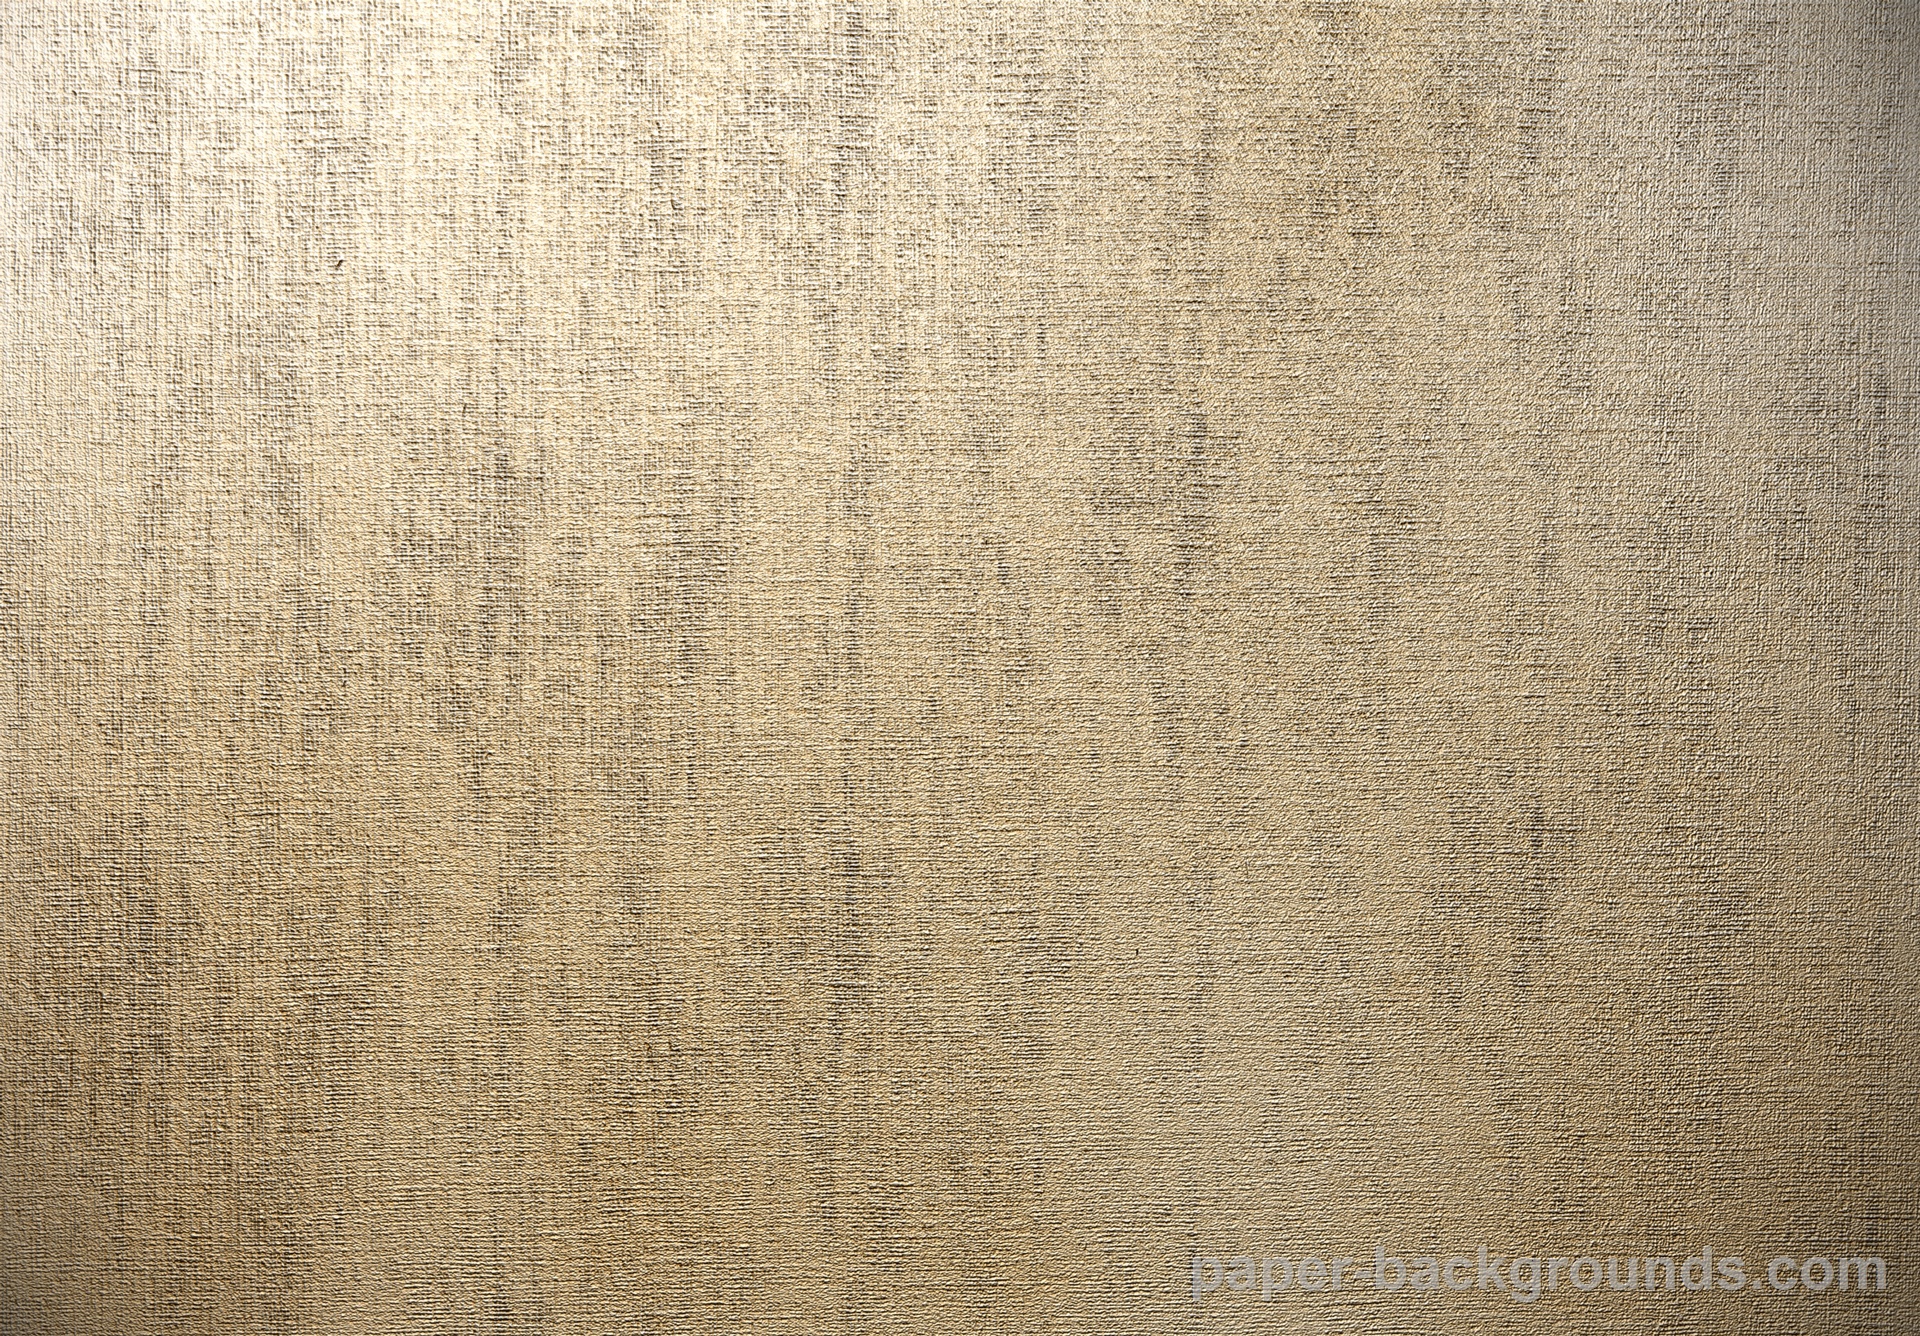 Home > Media > Natural Paper Texture Grunge Brown HD Clip Art